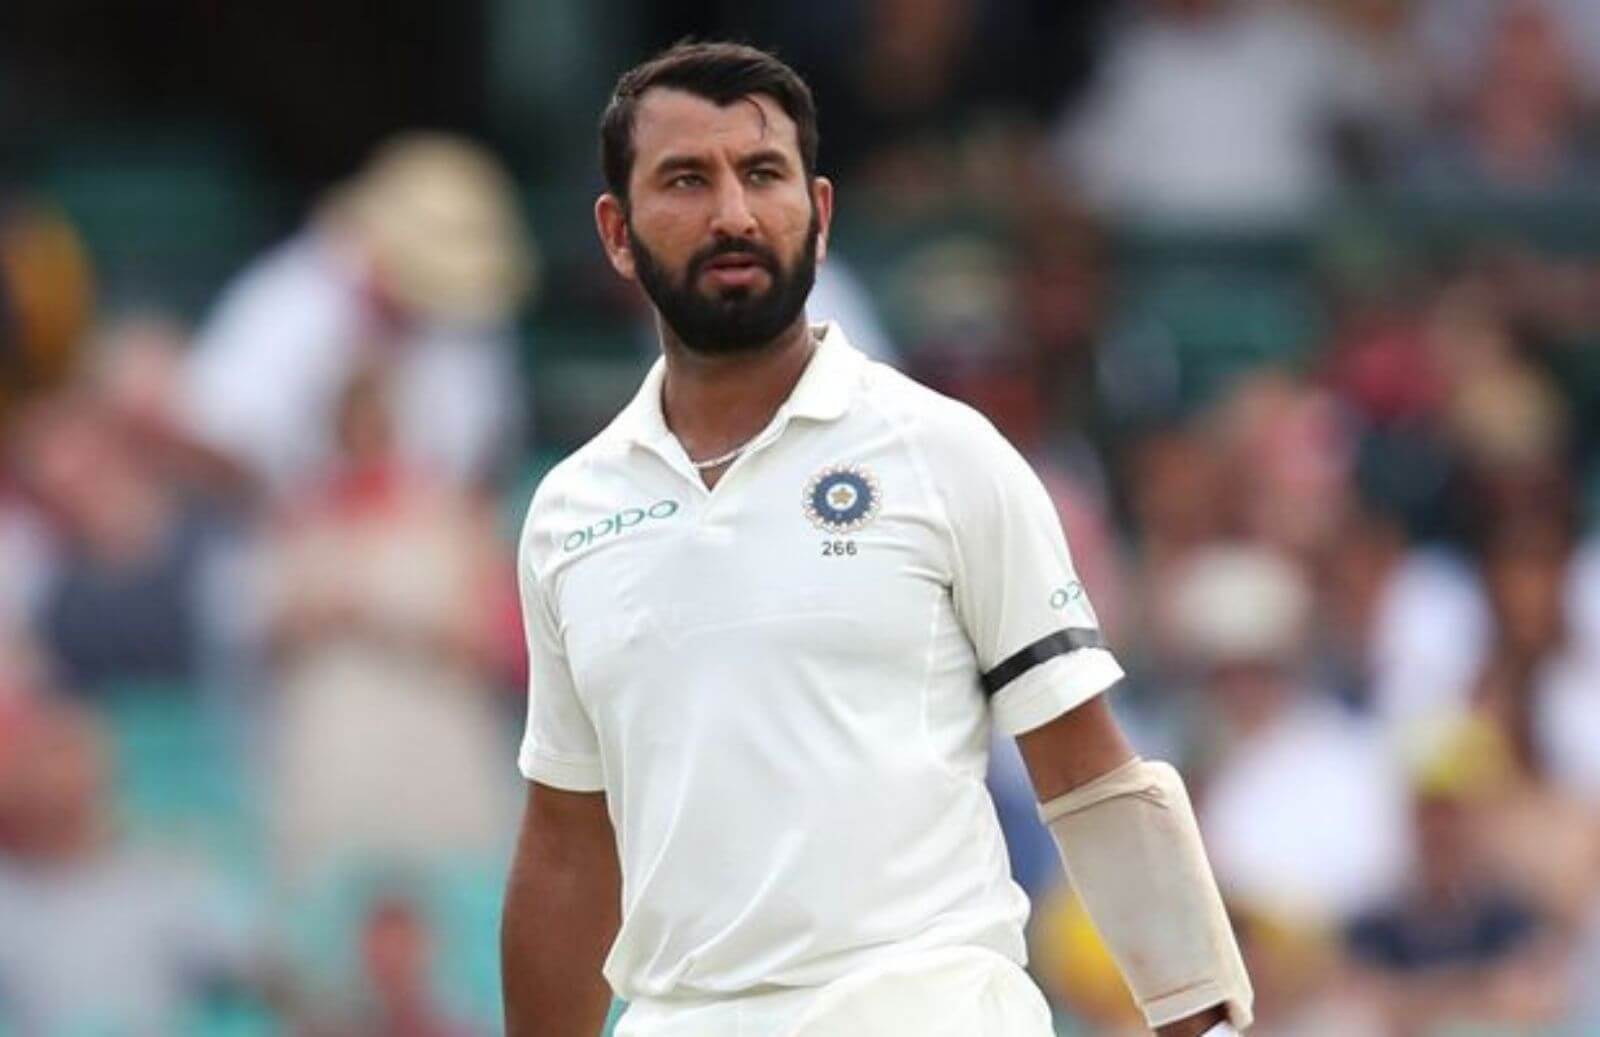 Watch_ Stubborn Cheteshwar Pujara Departs, Nathan Lyon Bowls Peach Of A Delivery To Dismiss Indian Batsman